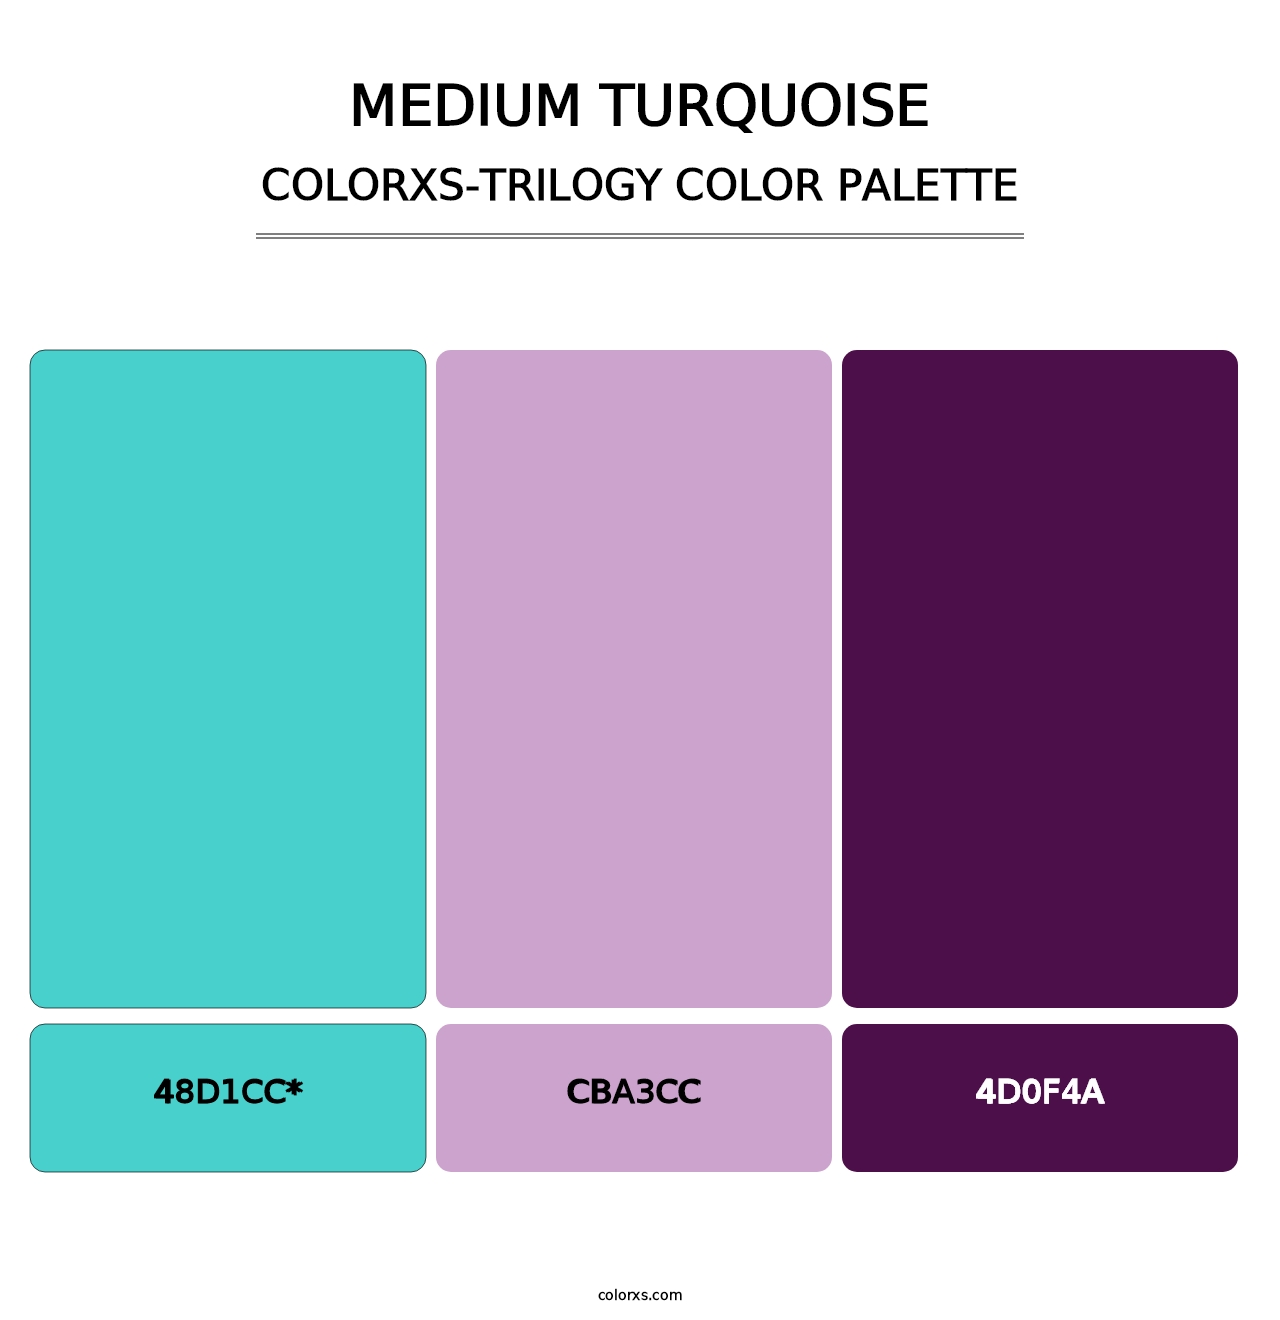 Medium Turquoise - Colorxs Trilogy Palette